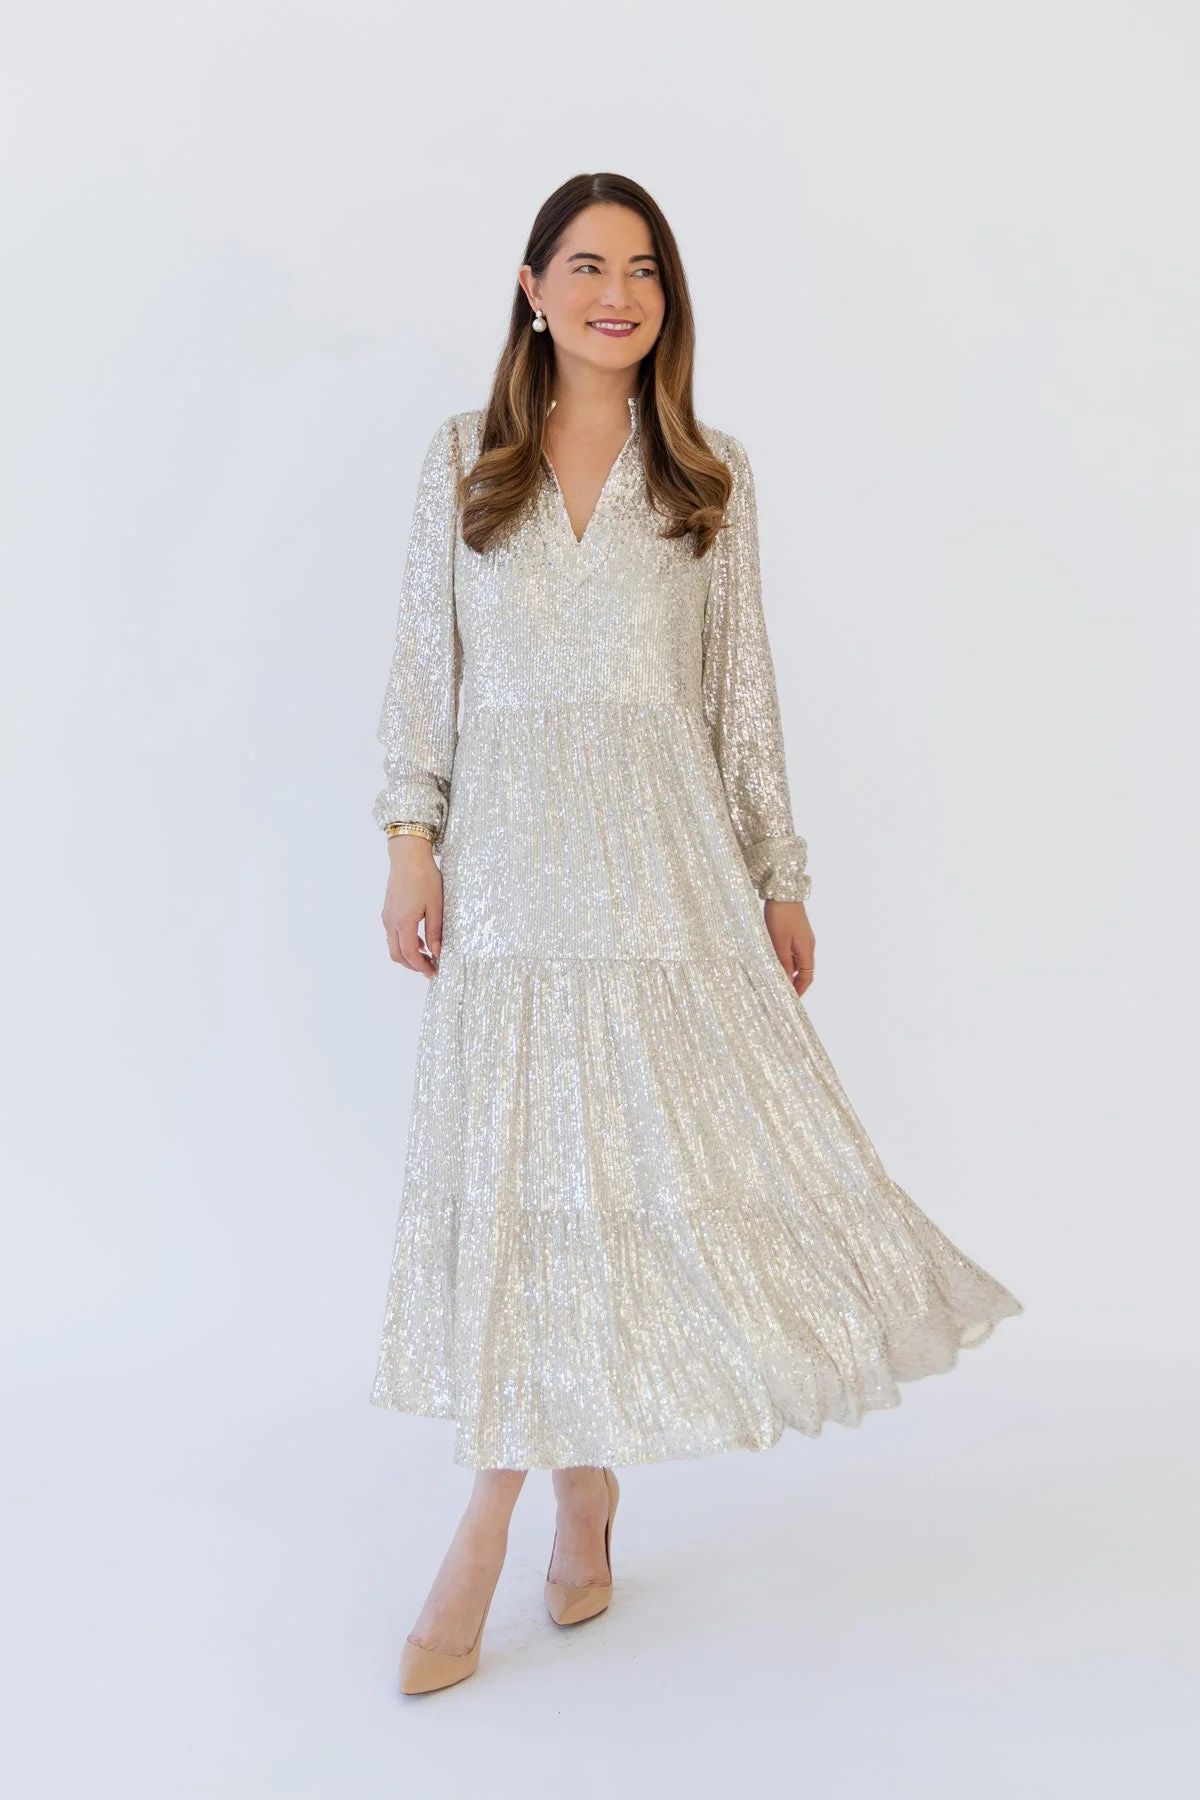 Silver Anne Sequin Maxi Dress | Sail to Sable